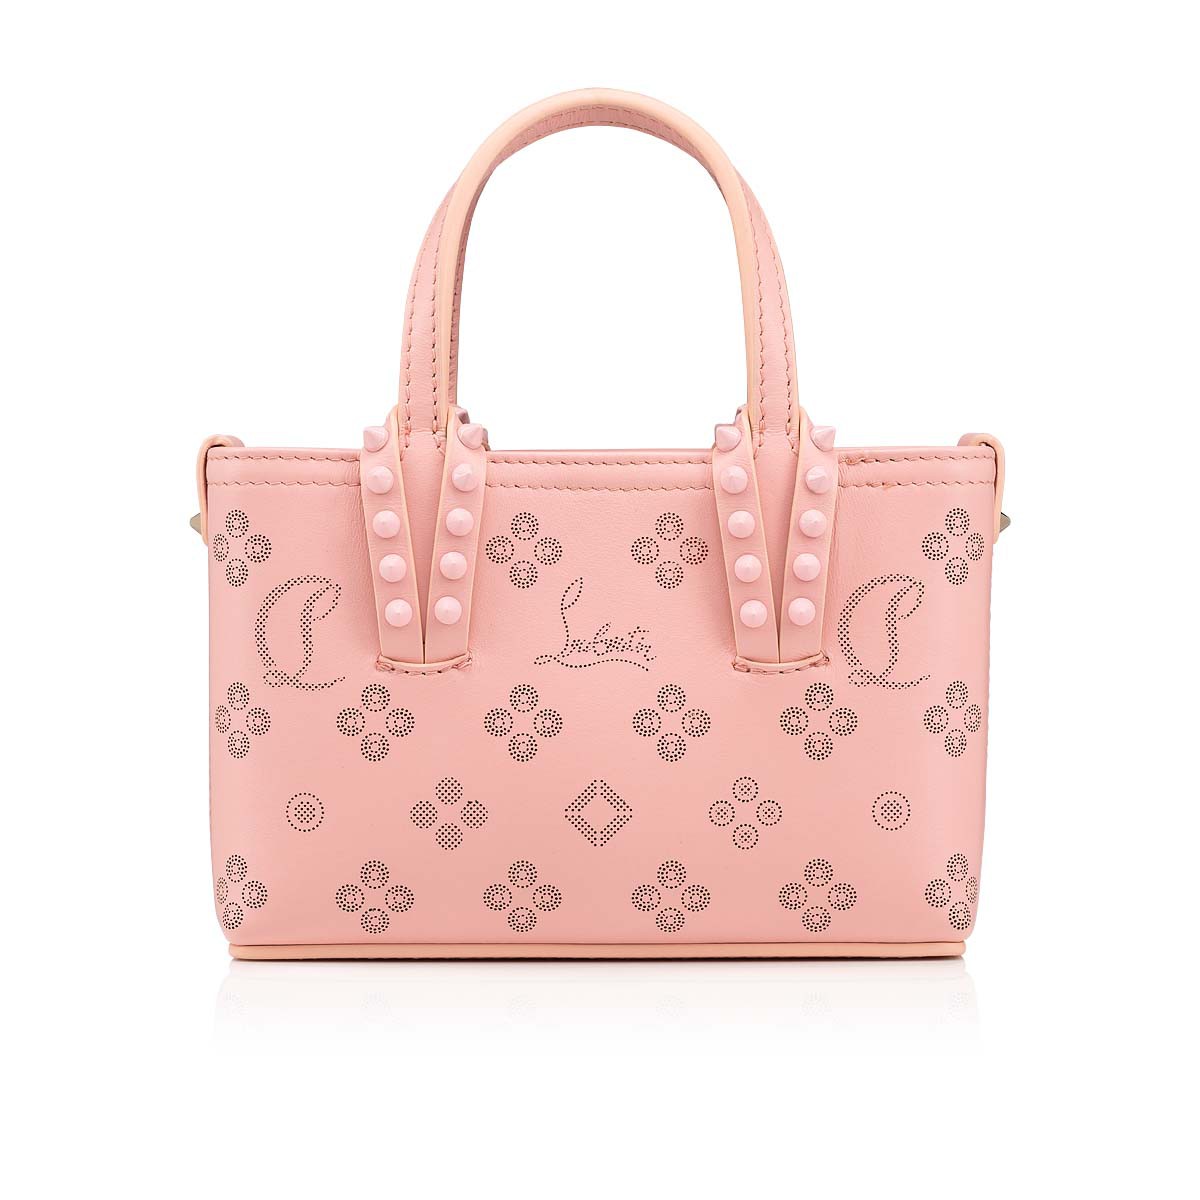 Cabata E/W nano Pink Calf - Handbags - Christian Louboutin